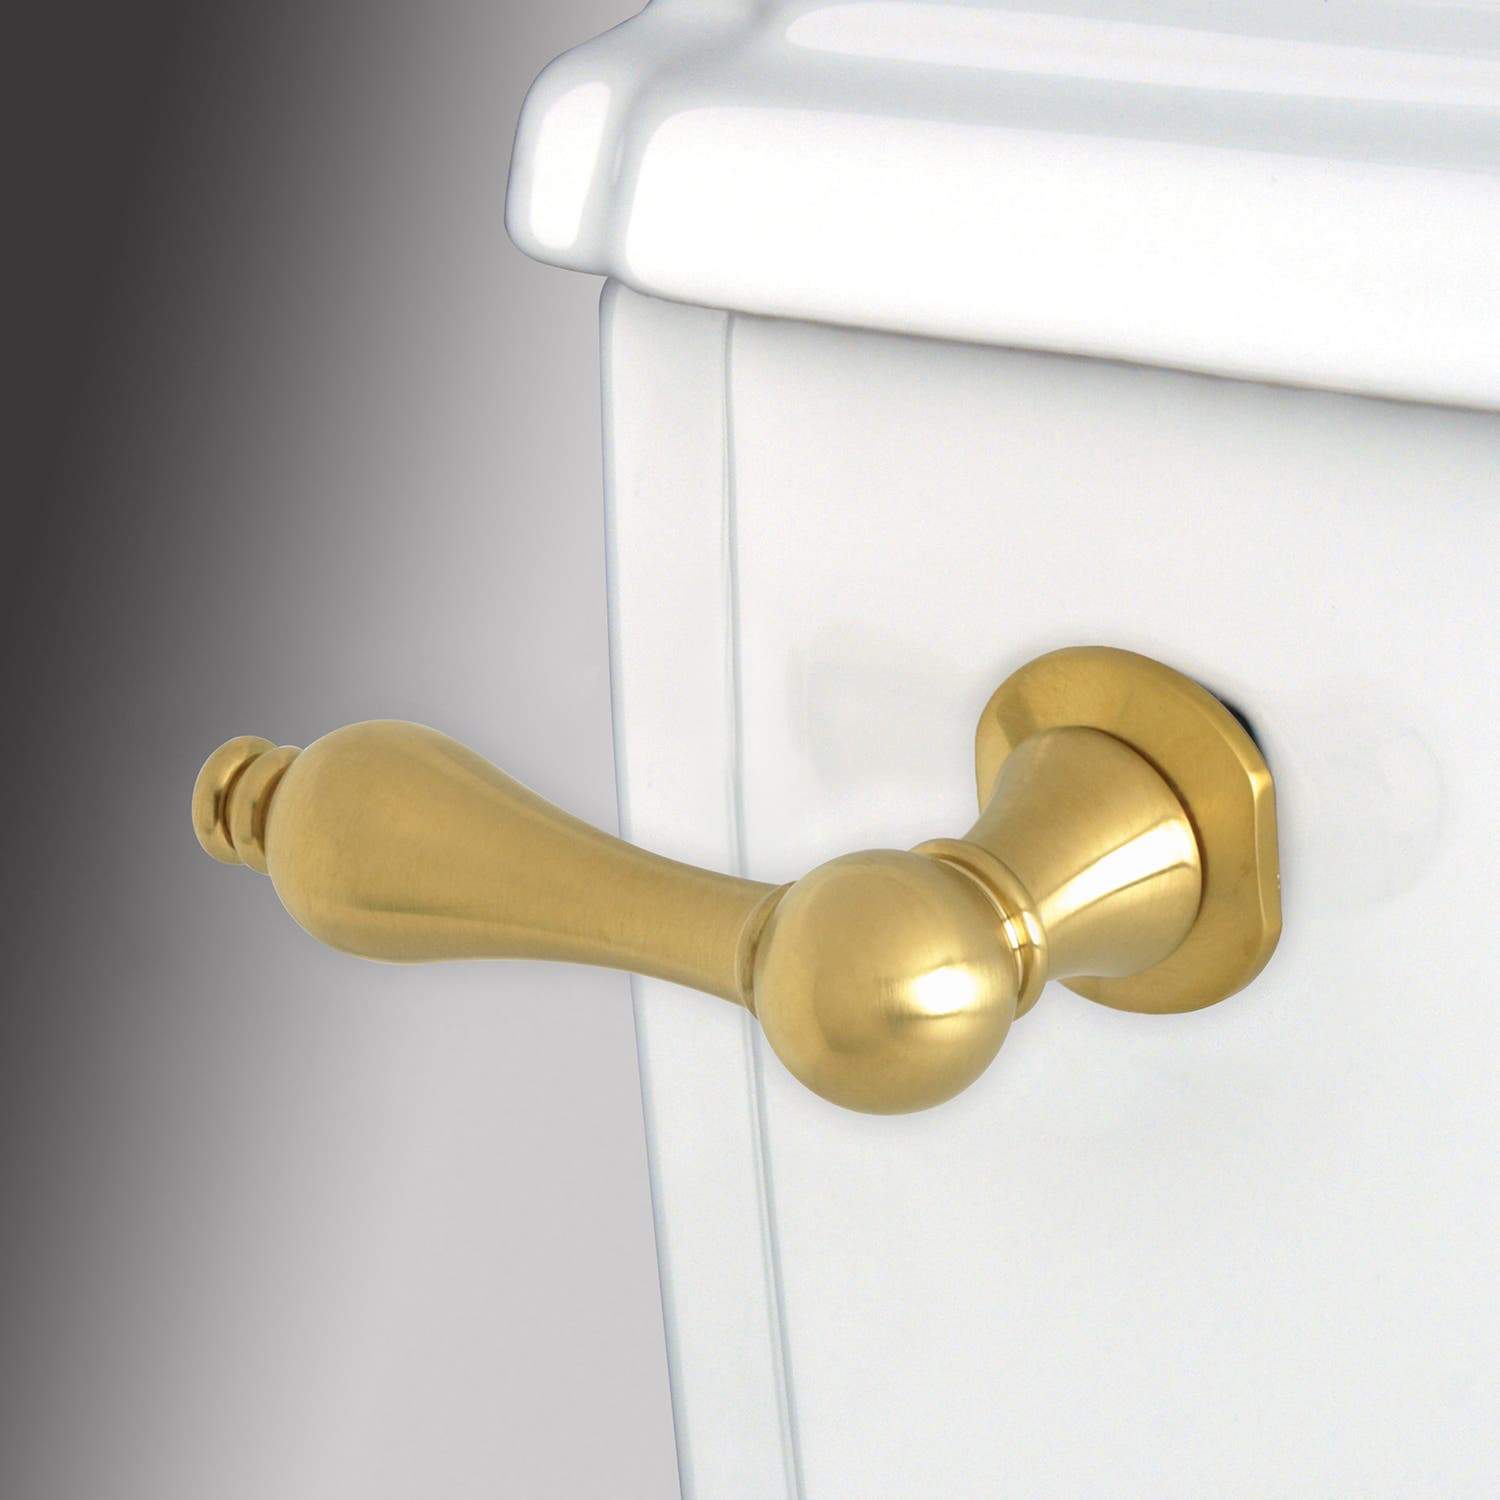 Kingston Brass Victorian Toilet Tank Lever in Brushed Brass